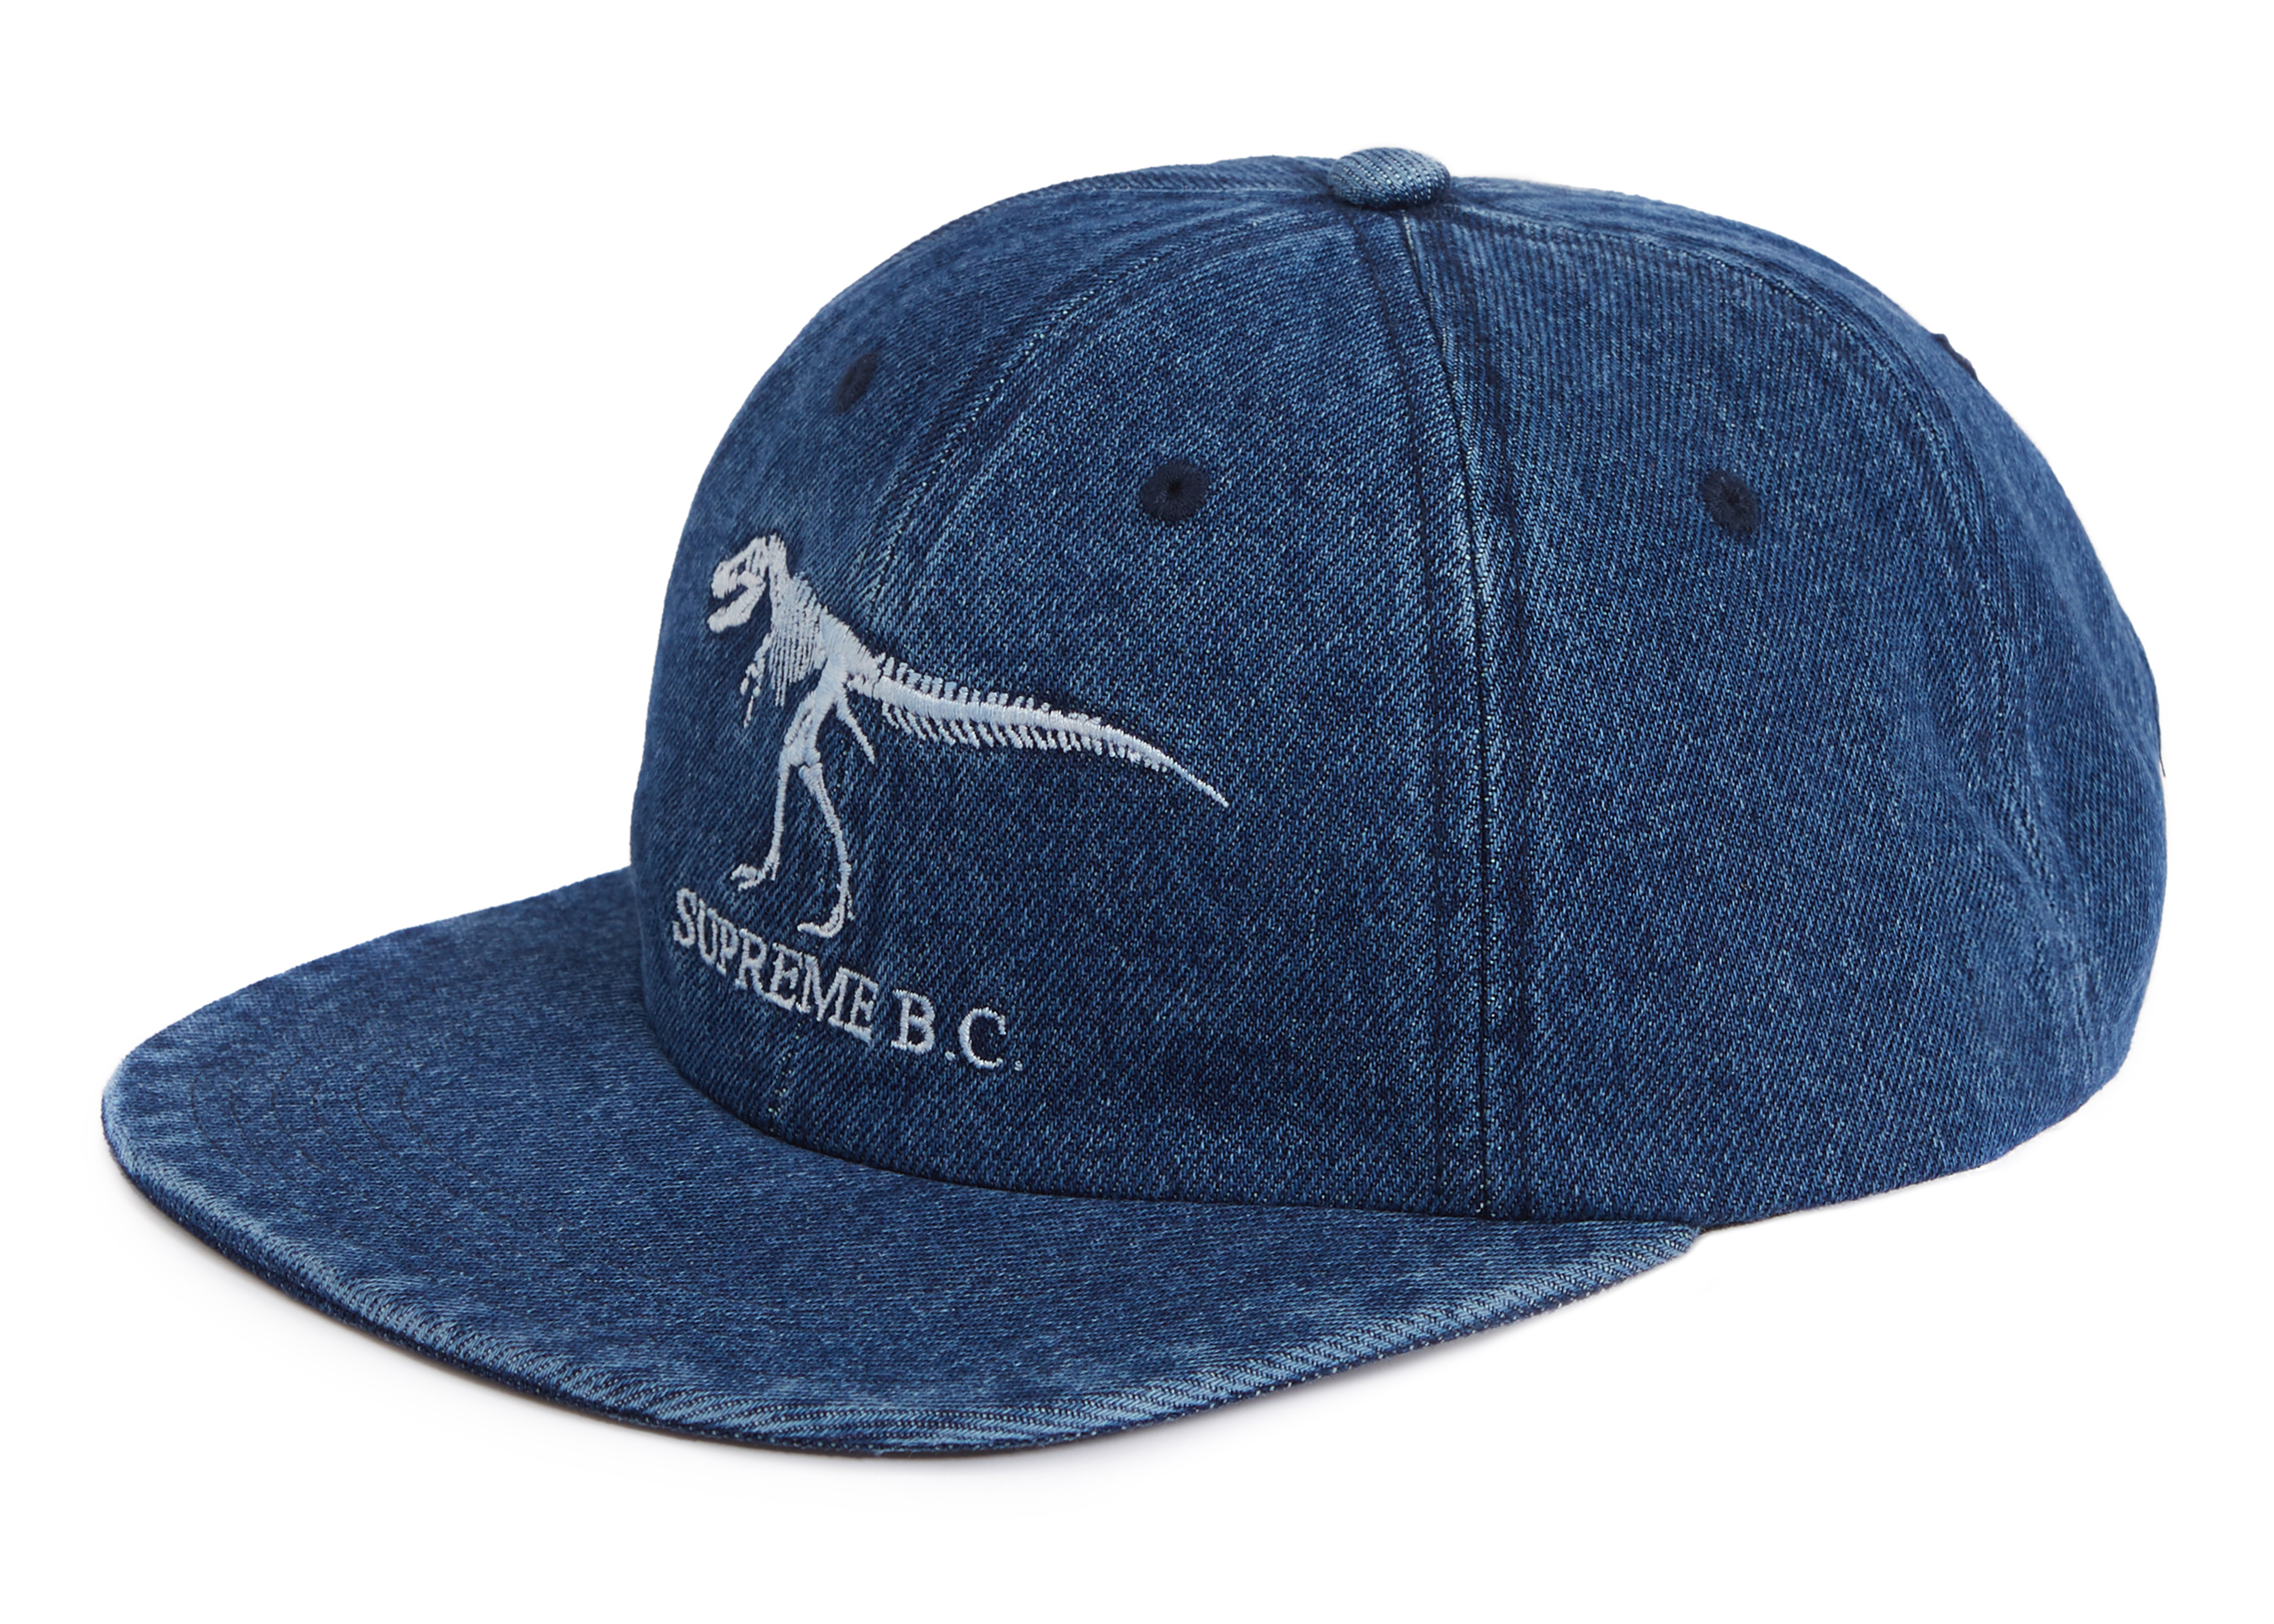 Supreme B.C. 6-Panel Hat Blue